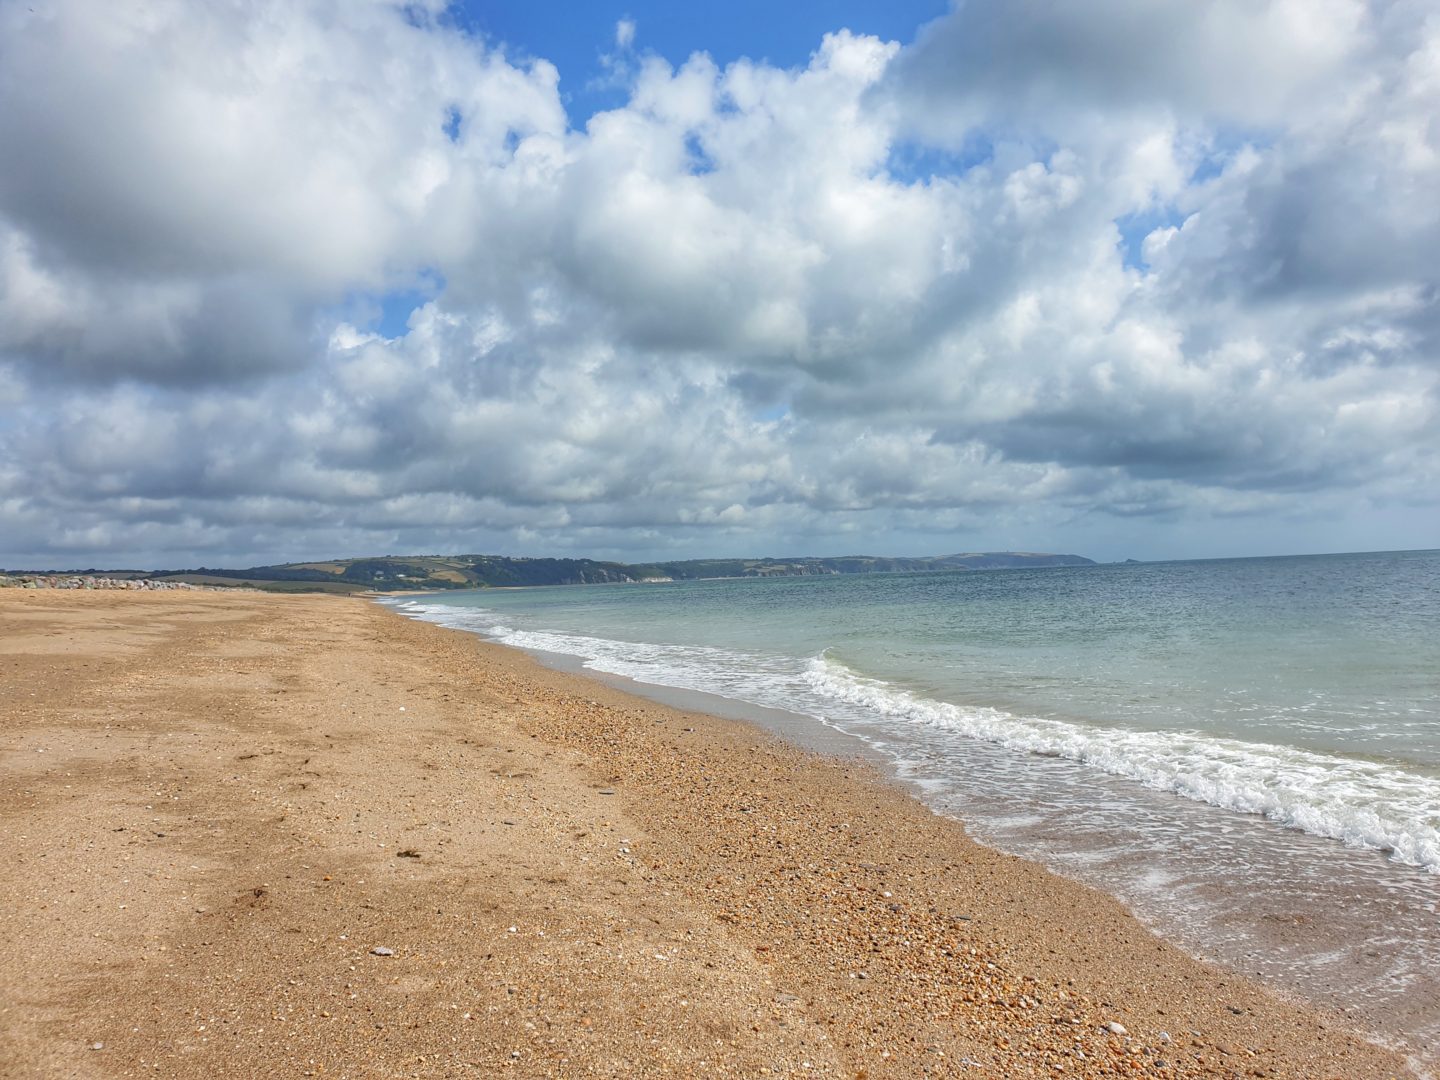 Landscape of the beach at Slapton Sands in Devon